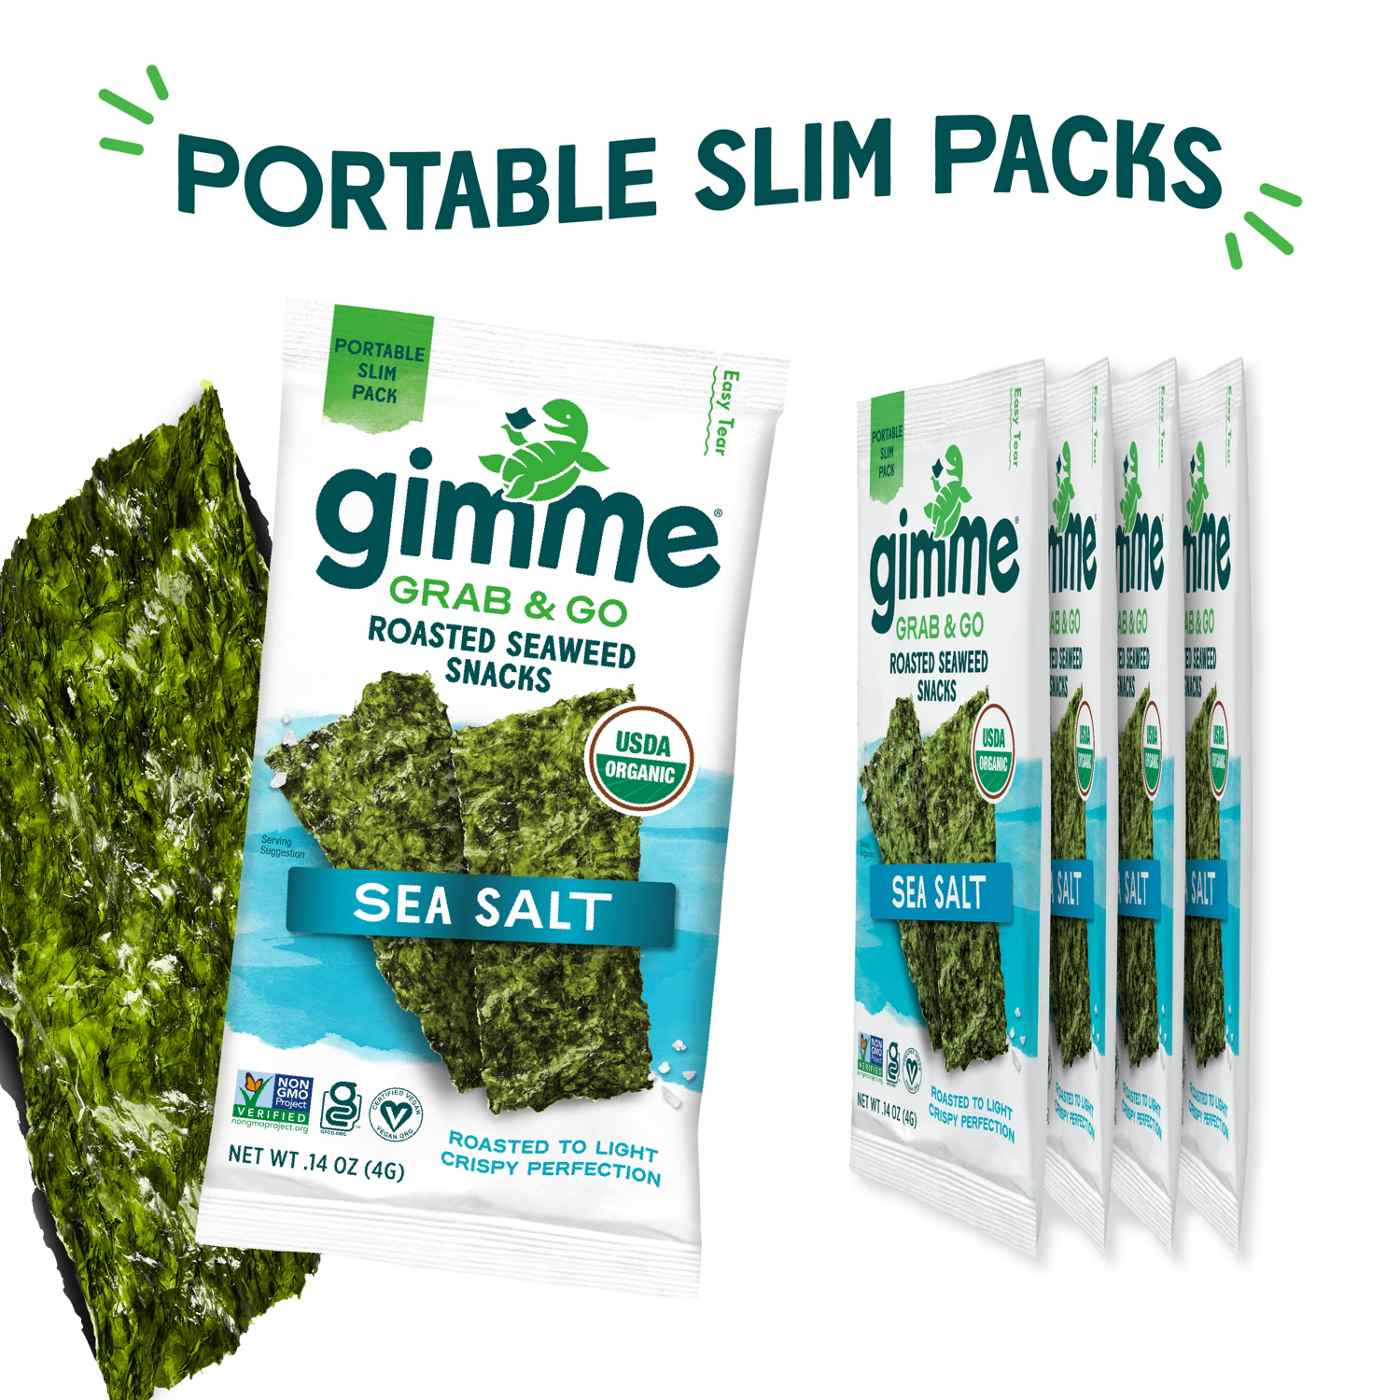 Gimme Grab & Go Roasted Seaweed Snacks Sea Salt; image 8 of 8